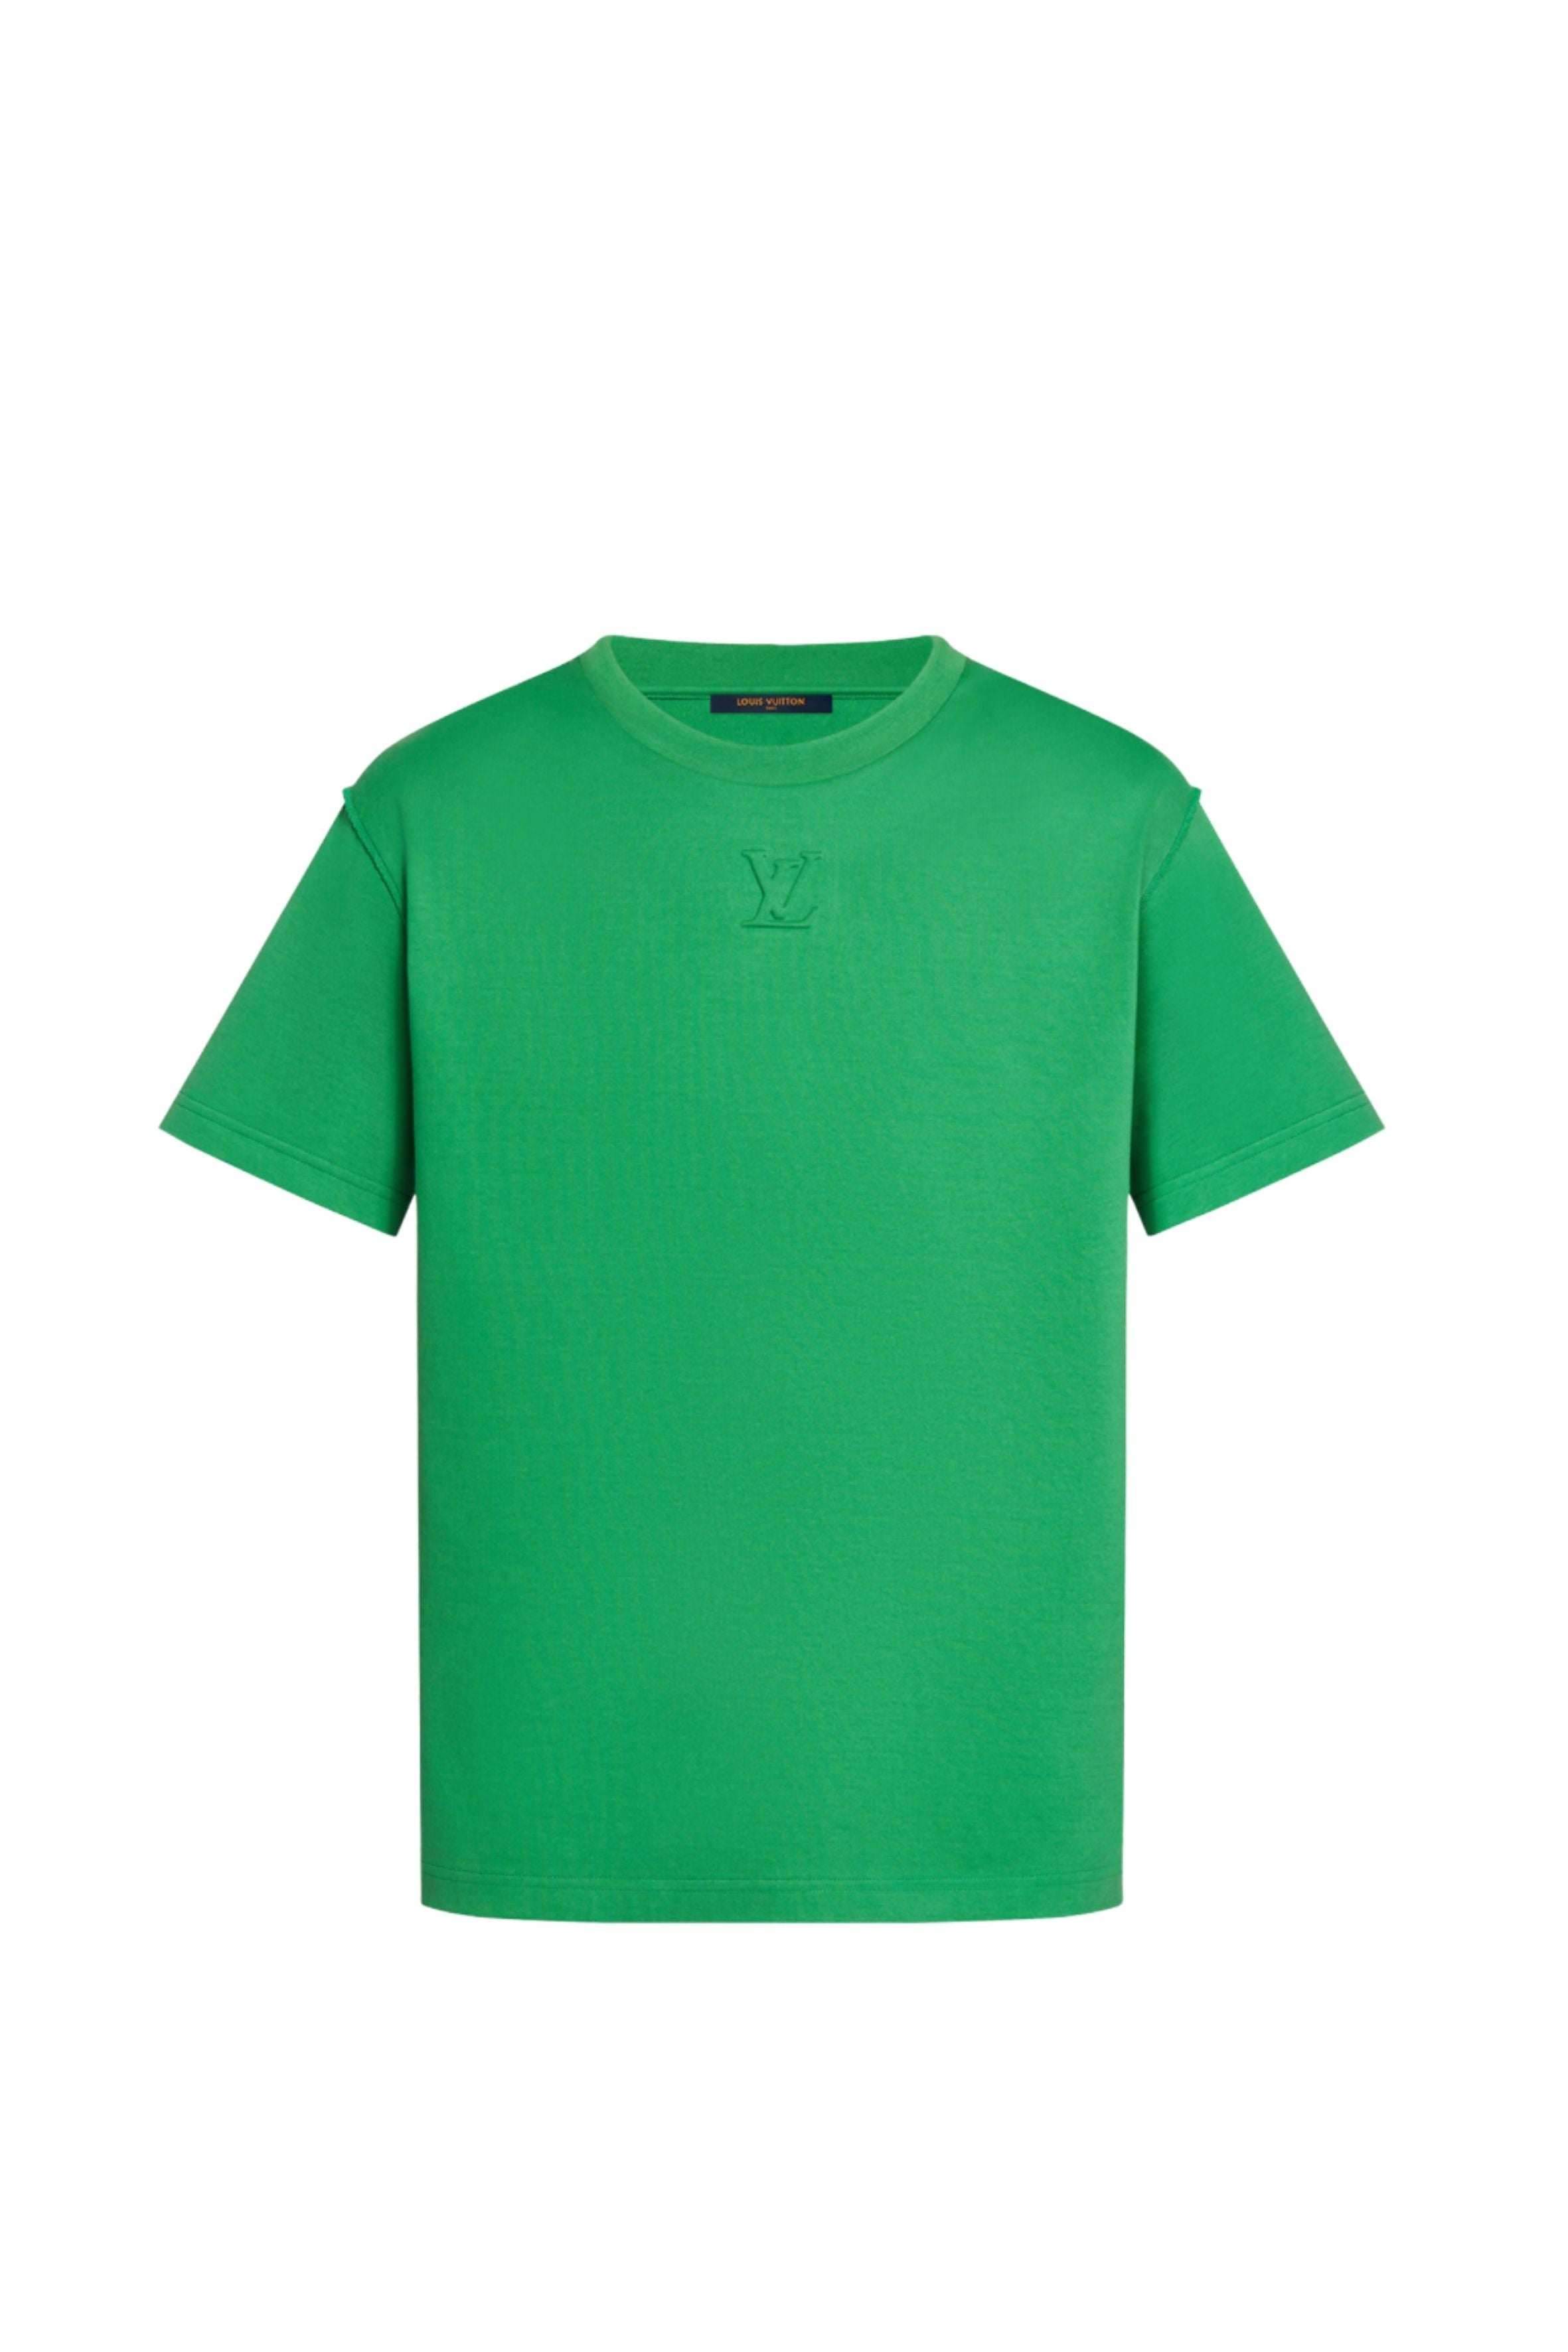 Louis Vuitton Debossed Tee Green (Fits L-XL)